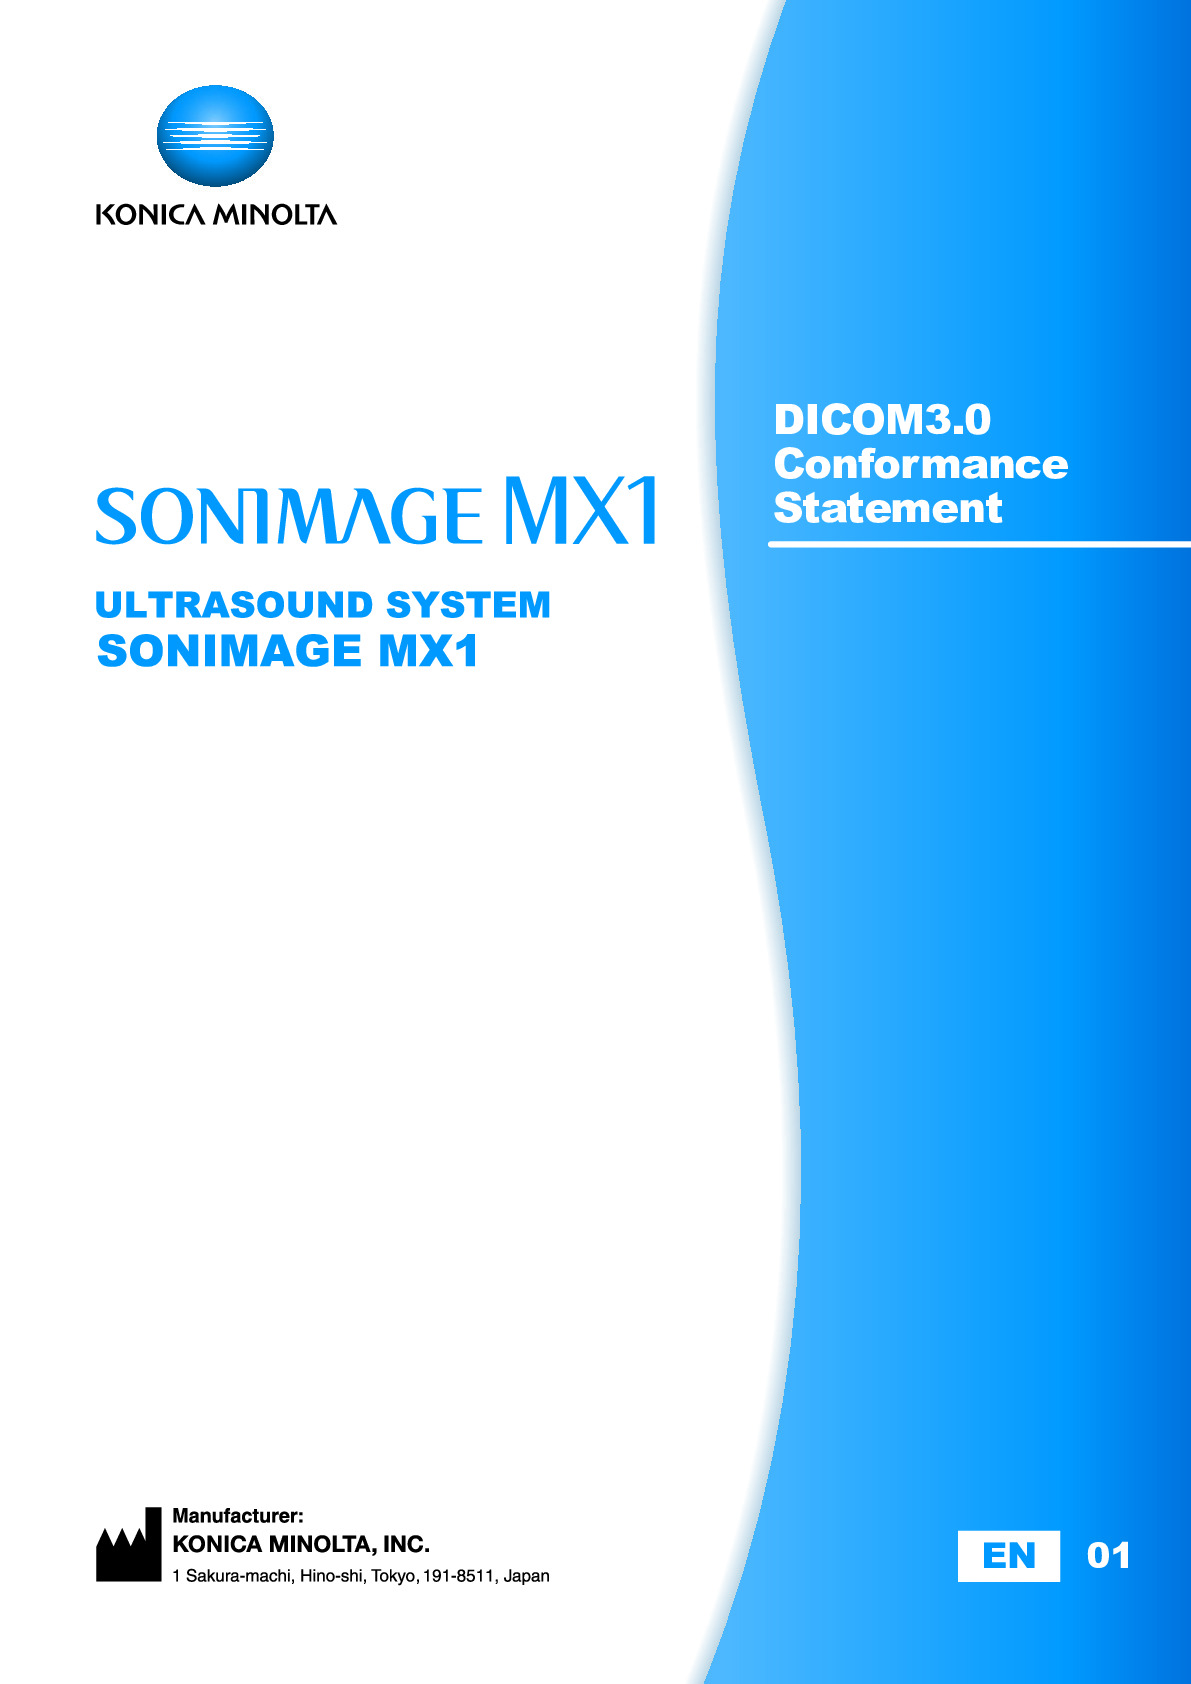 SONIMAGE MX1 DICOM3.0 Conformance Statement 01